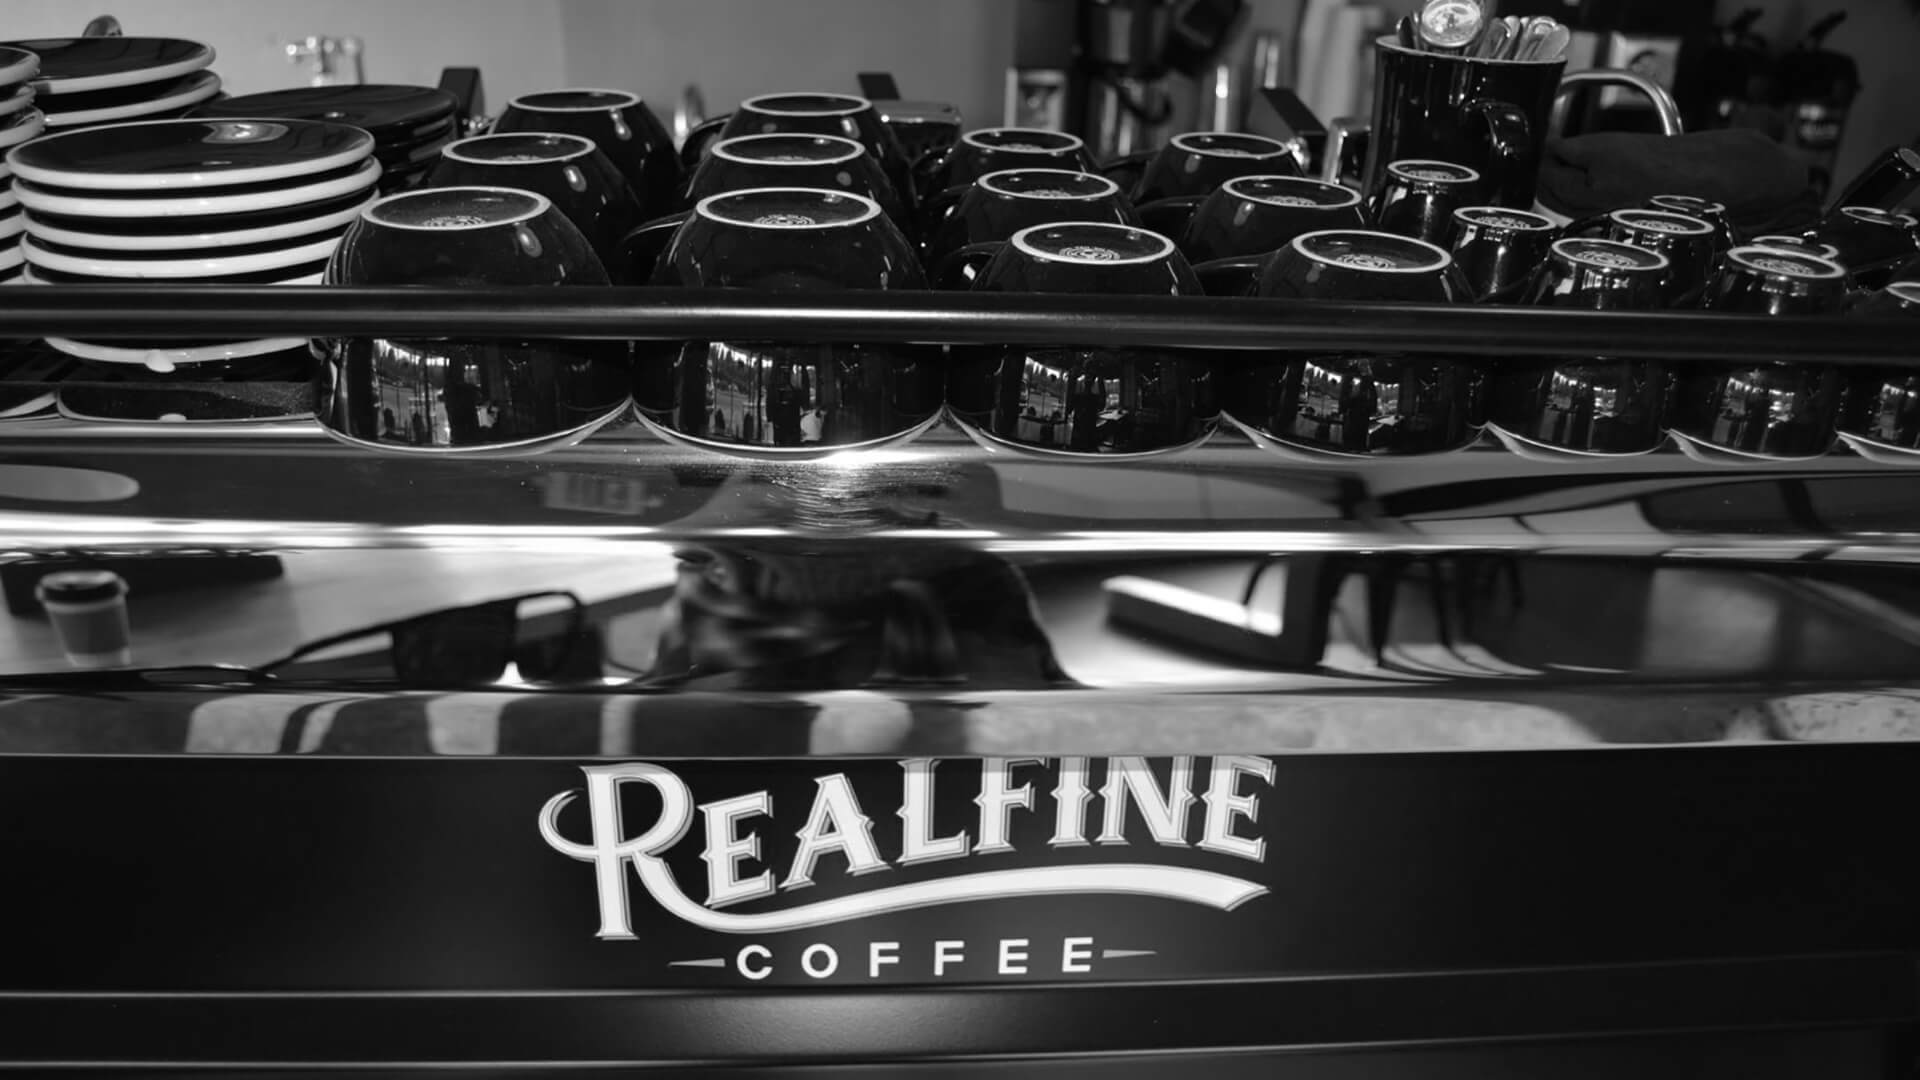 Home - Realfine Coffee